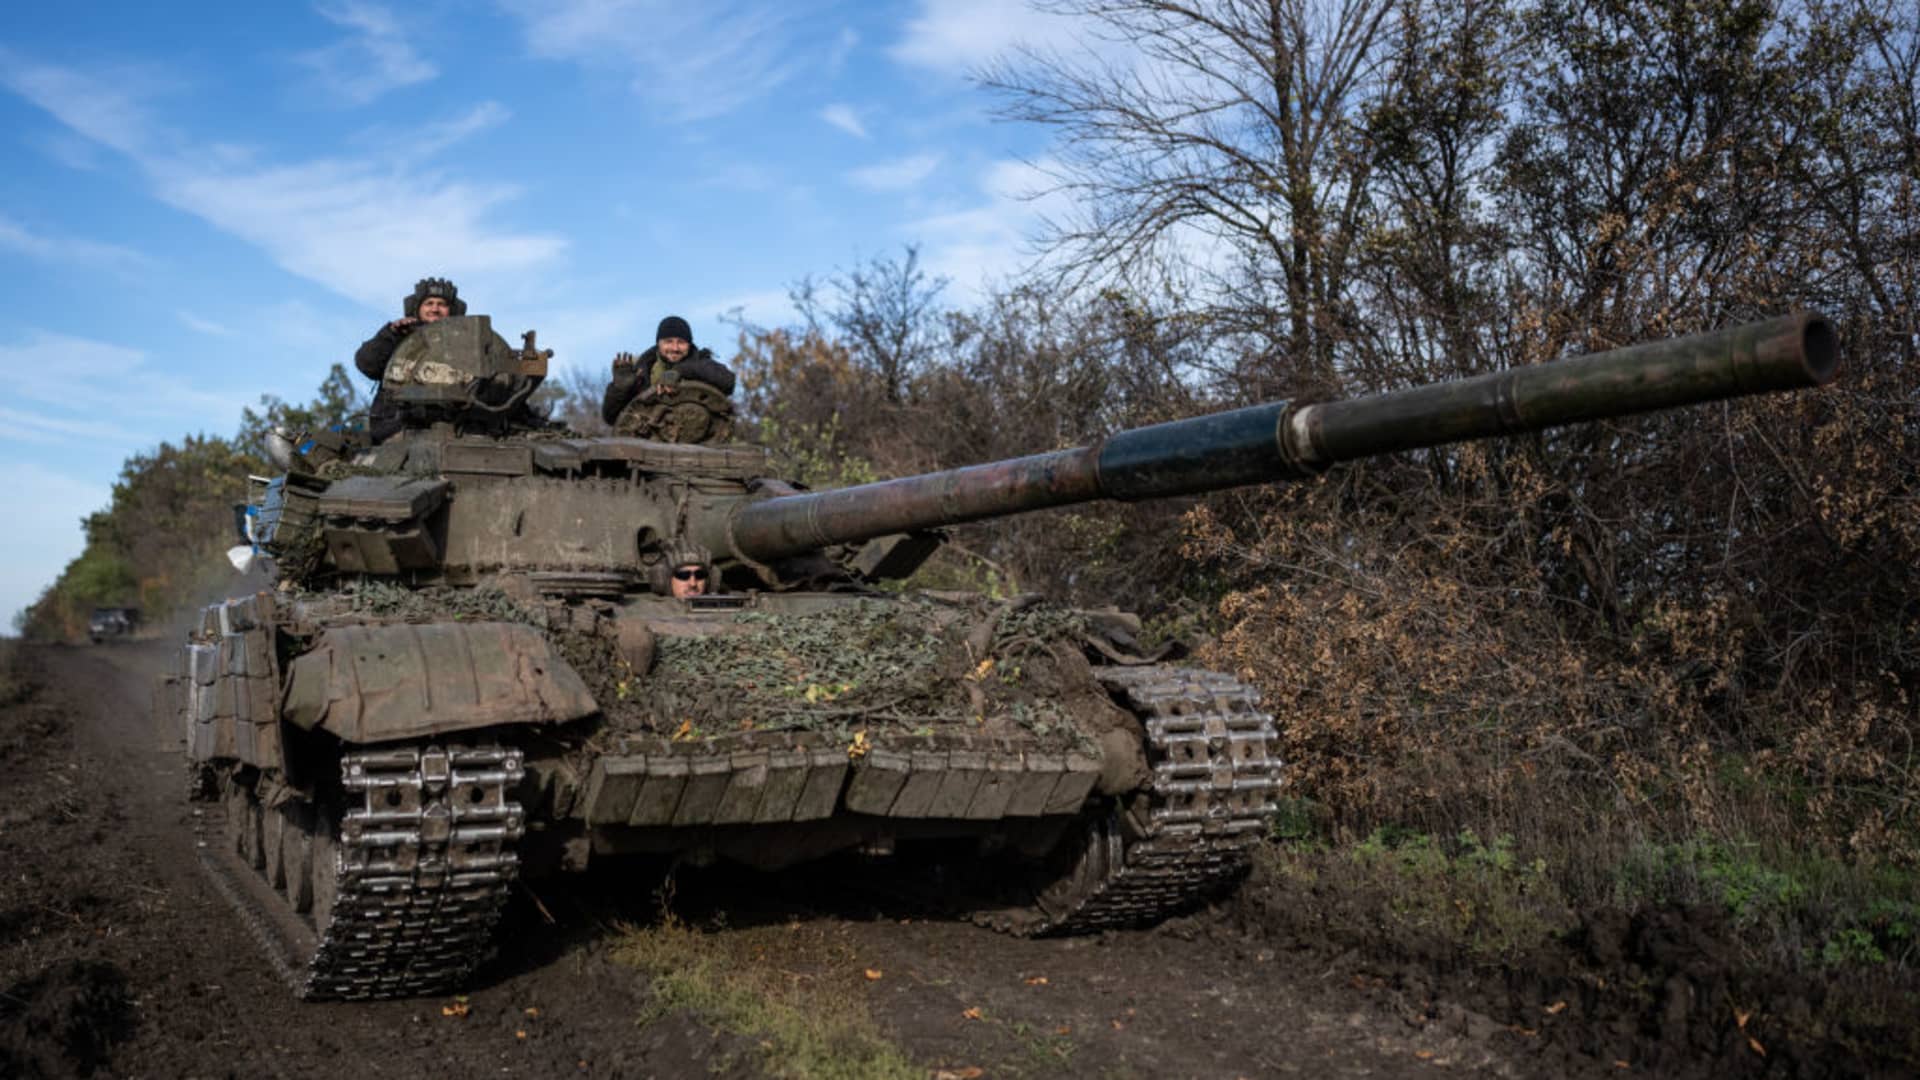 A Ukrainian tank crew fighting on the frontline is seen in Bakhmut, Donetsk Oblast, Ukraine on October 19, 2022.